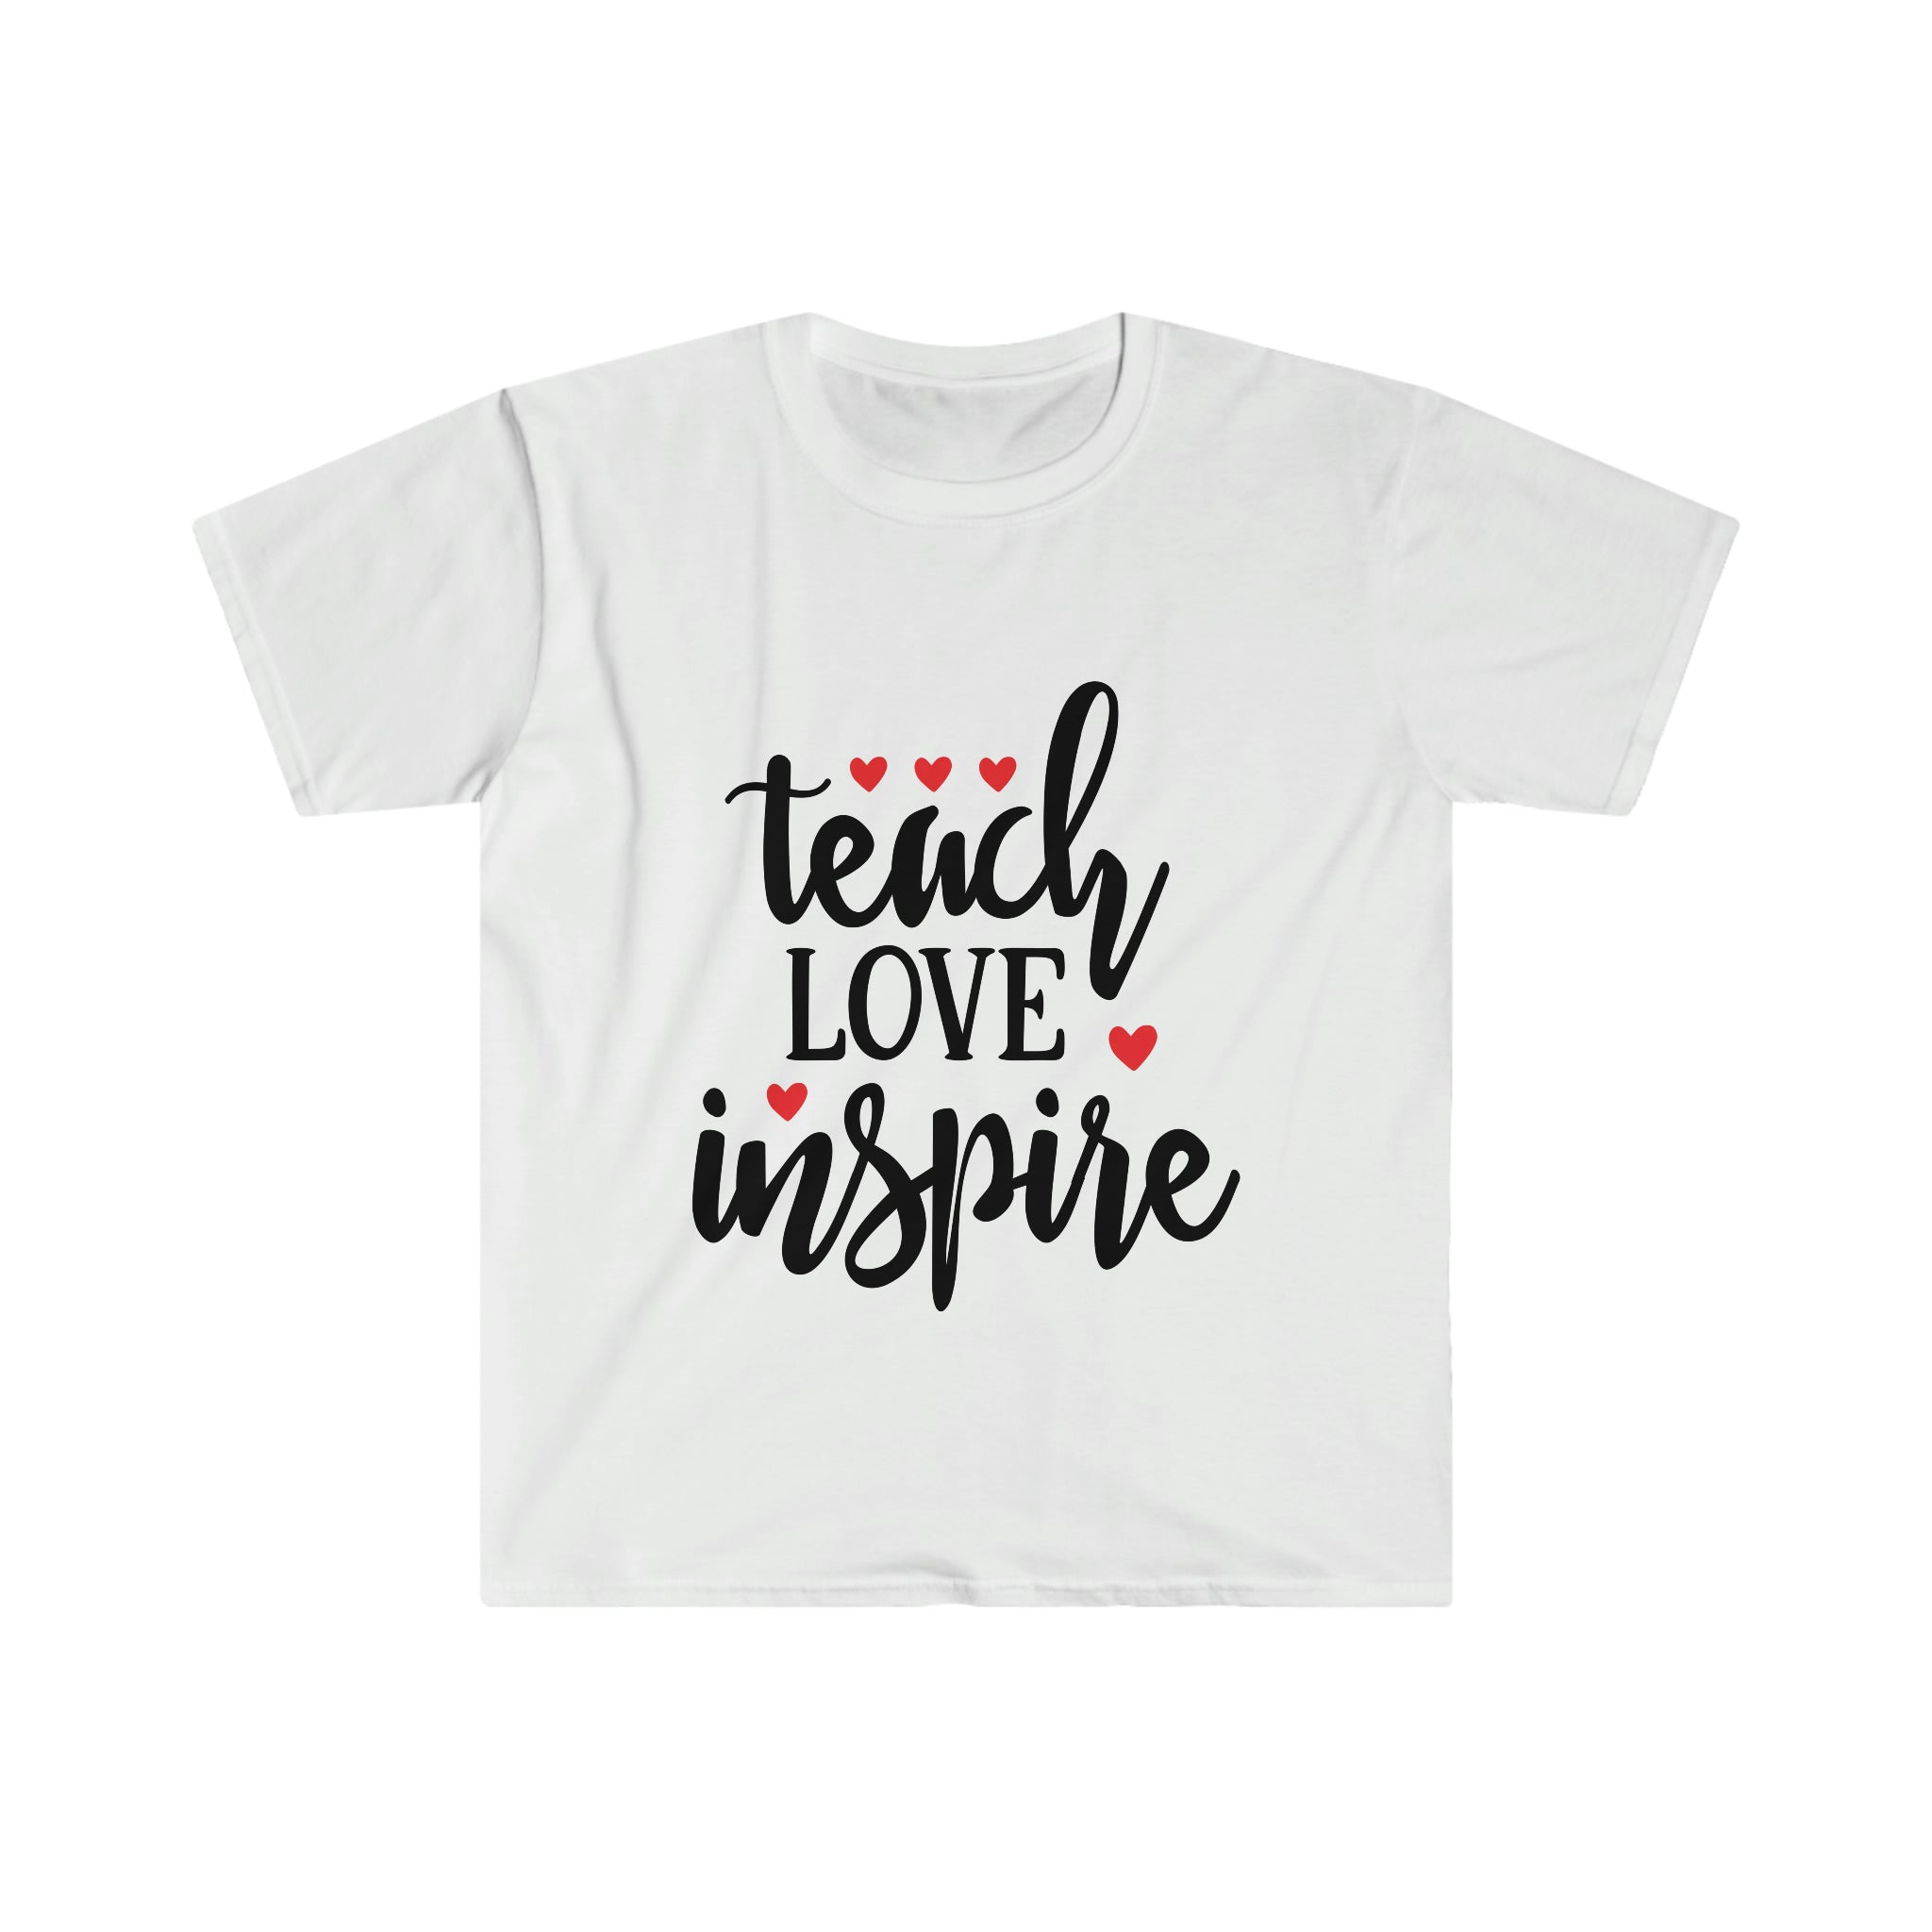 A teacher's Teach, Love, Inspire T-Shirt displaying a motivational message to teach, love, and inspire.